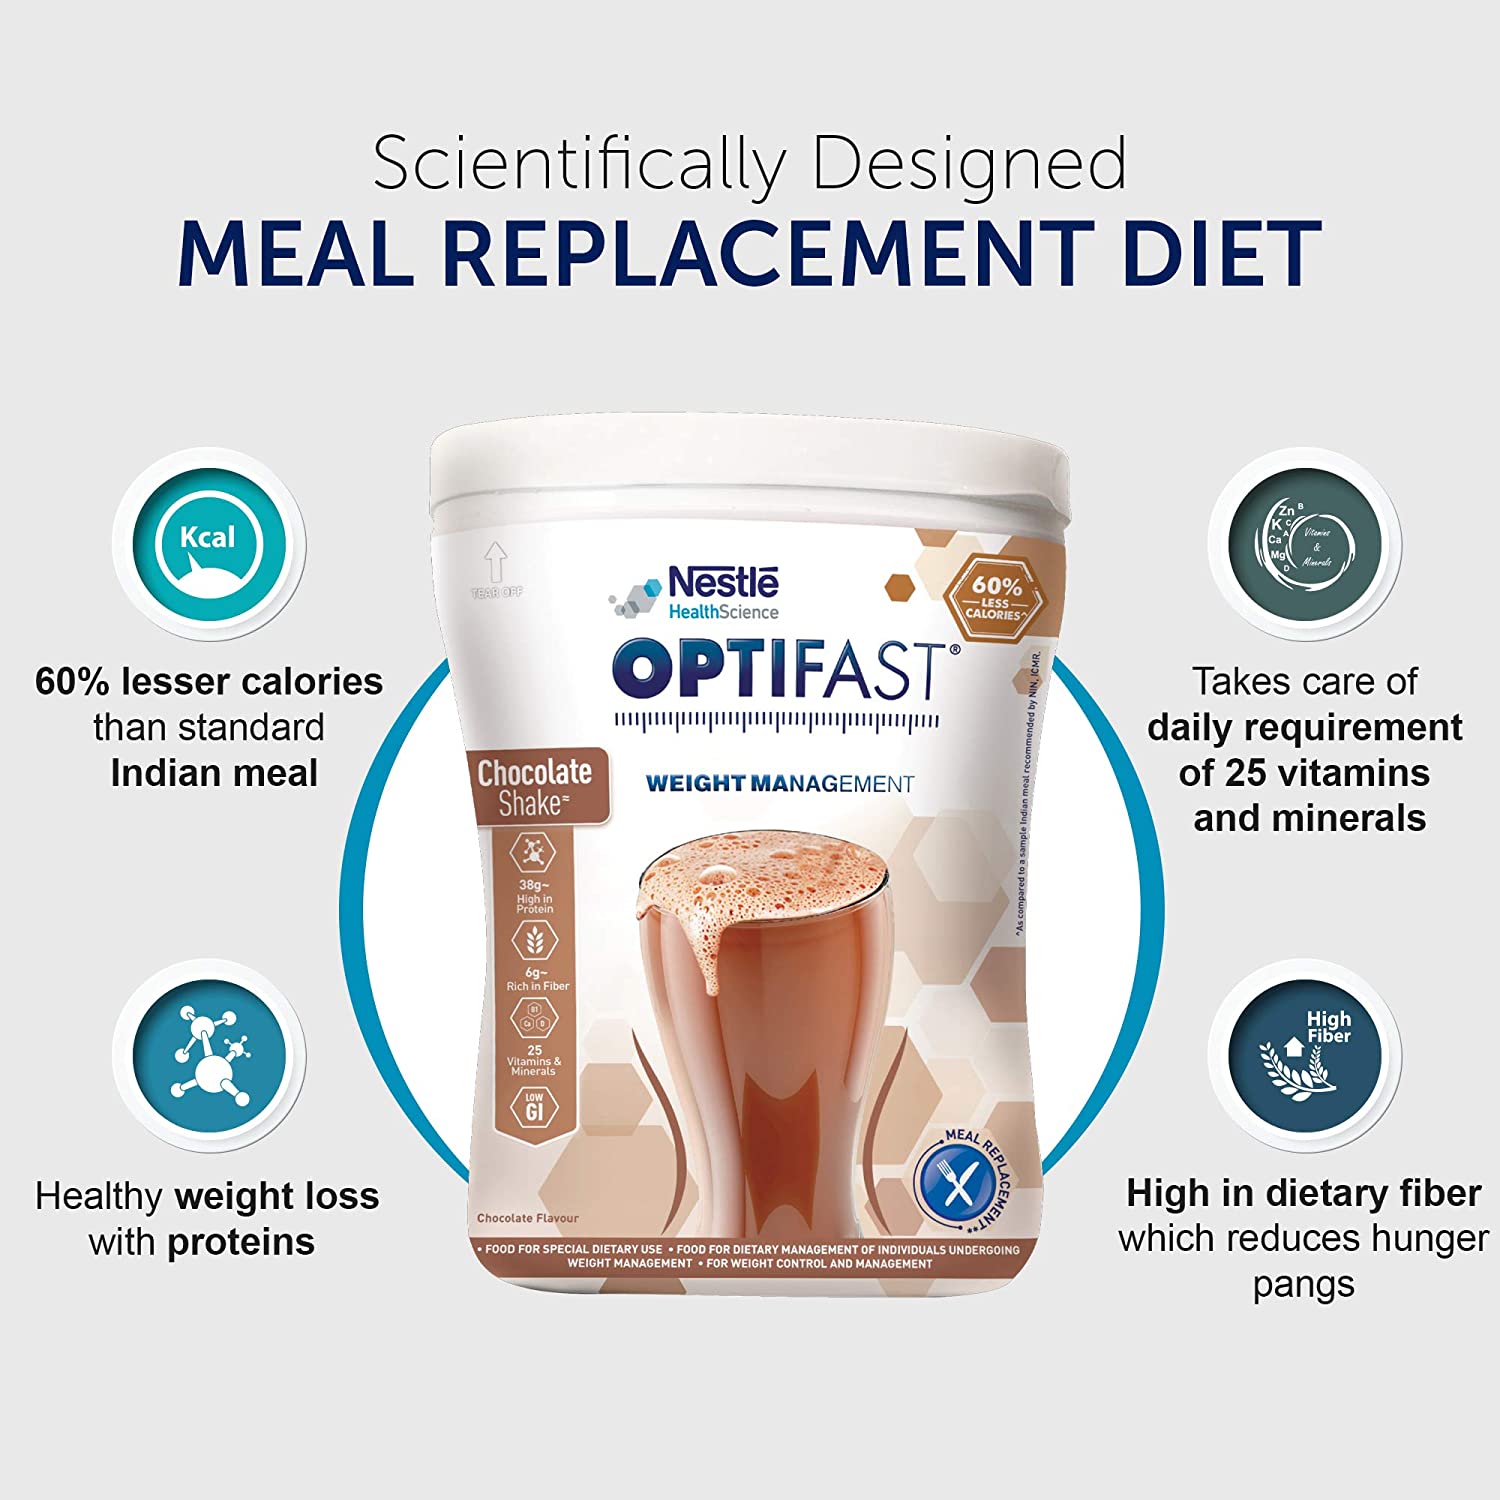 Nestlé Optifast Scientifically Designed Weight Loss Diet